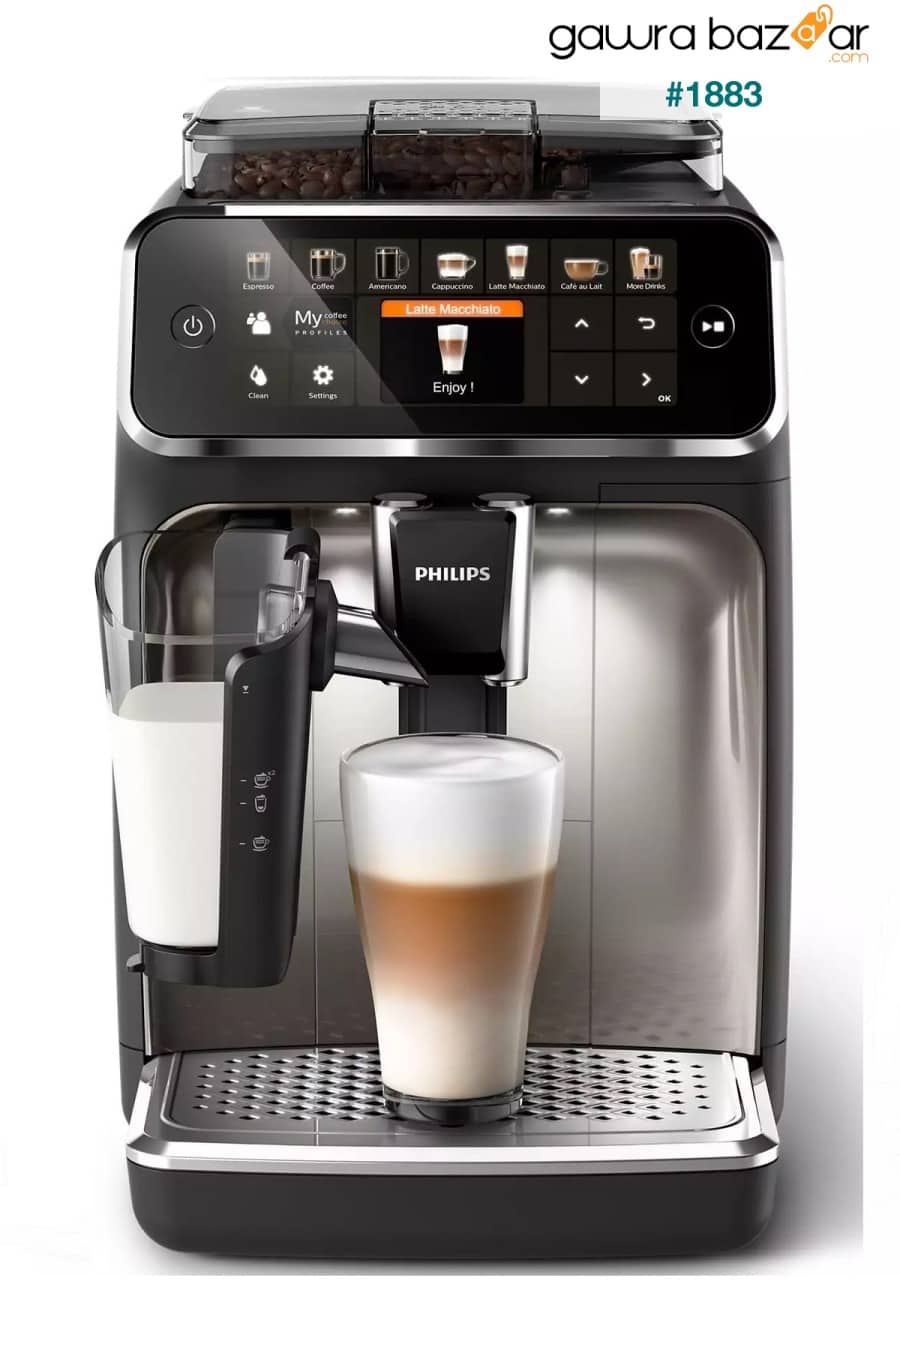 Ep5447 / 90 ماكينة تحضير القهوة والإسبريسو أوتوماتيكية بالكامل Philips 2